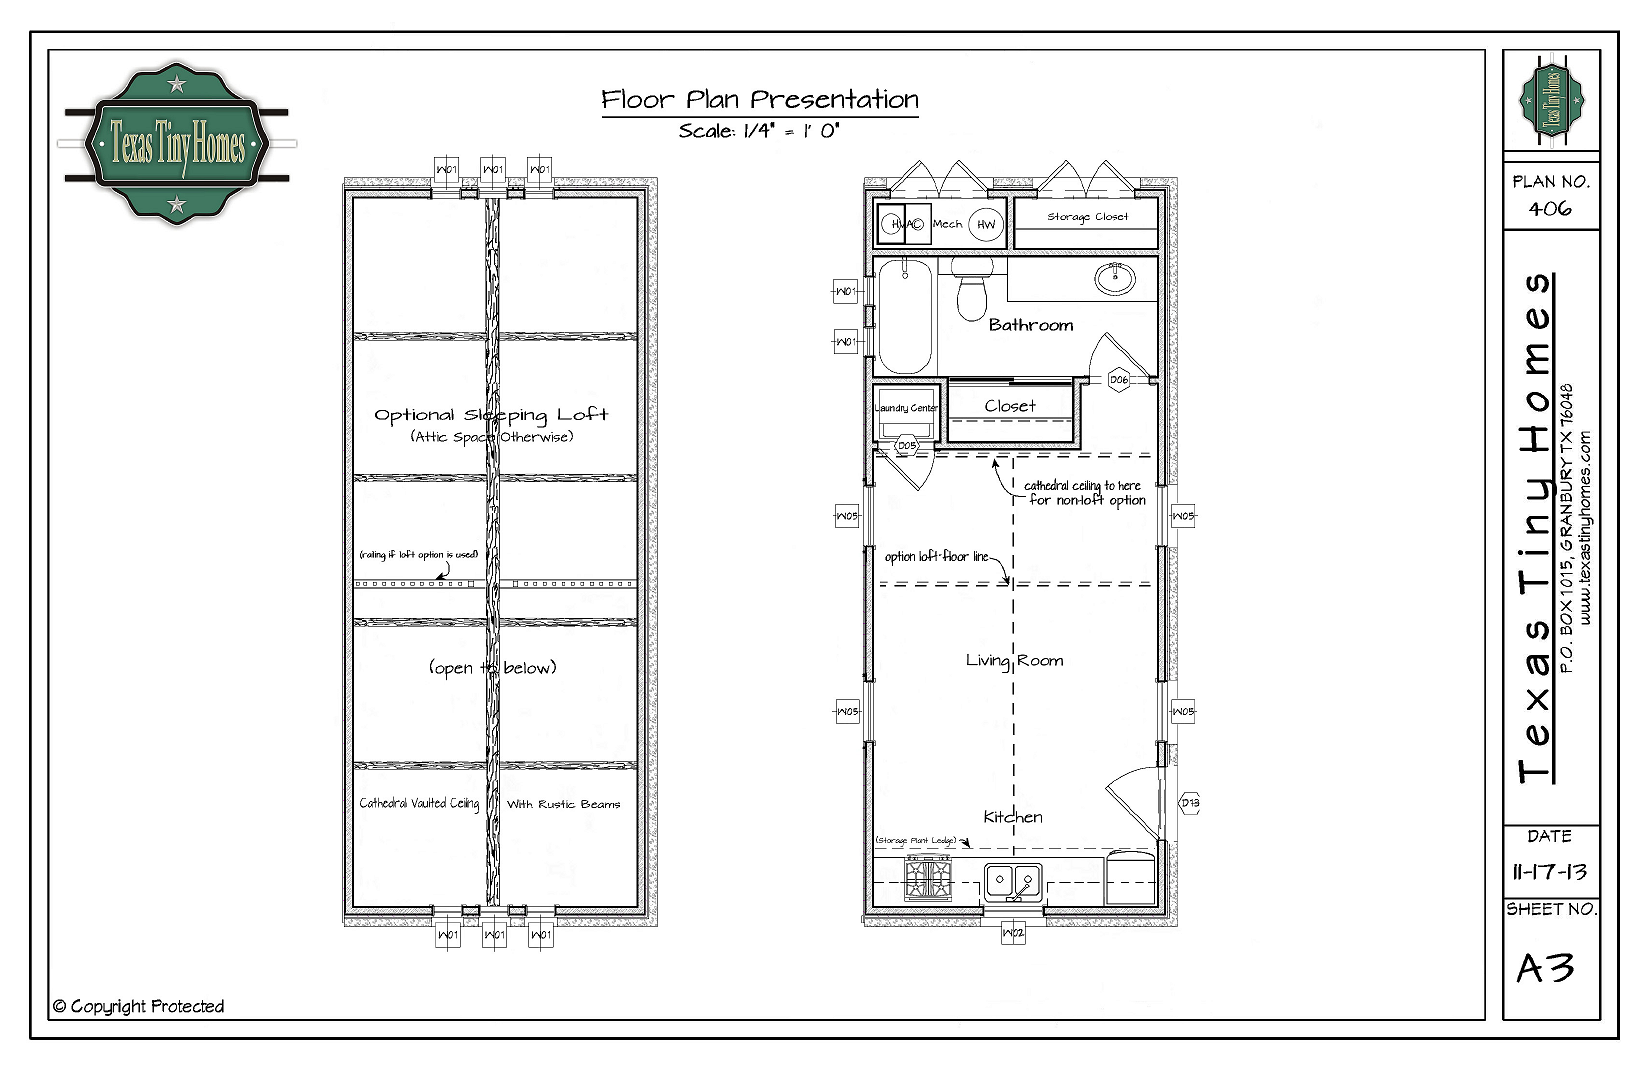 Floor Plan Presentation For Website